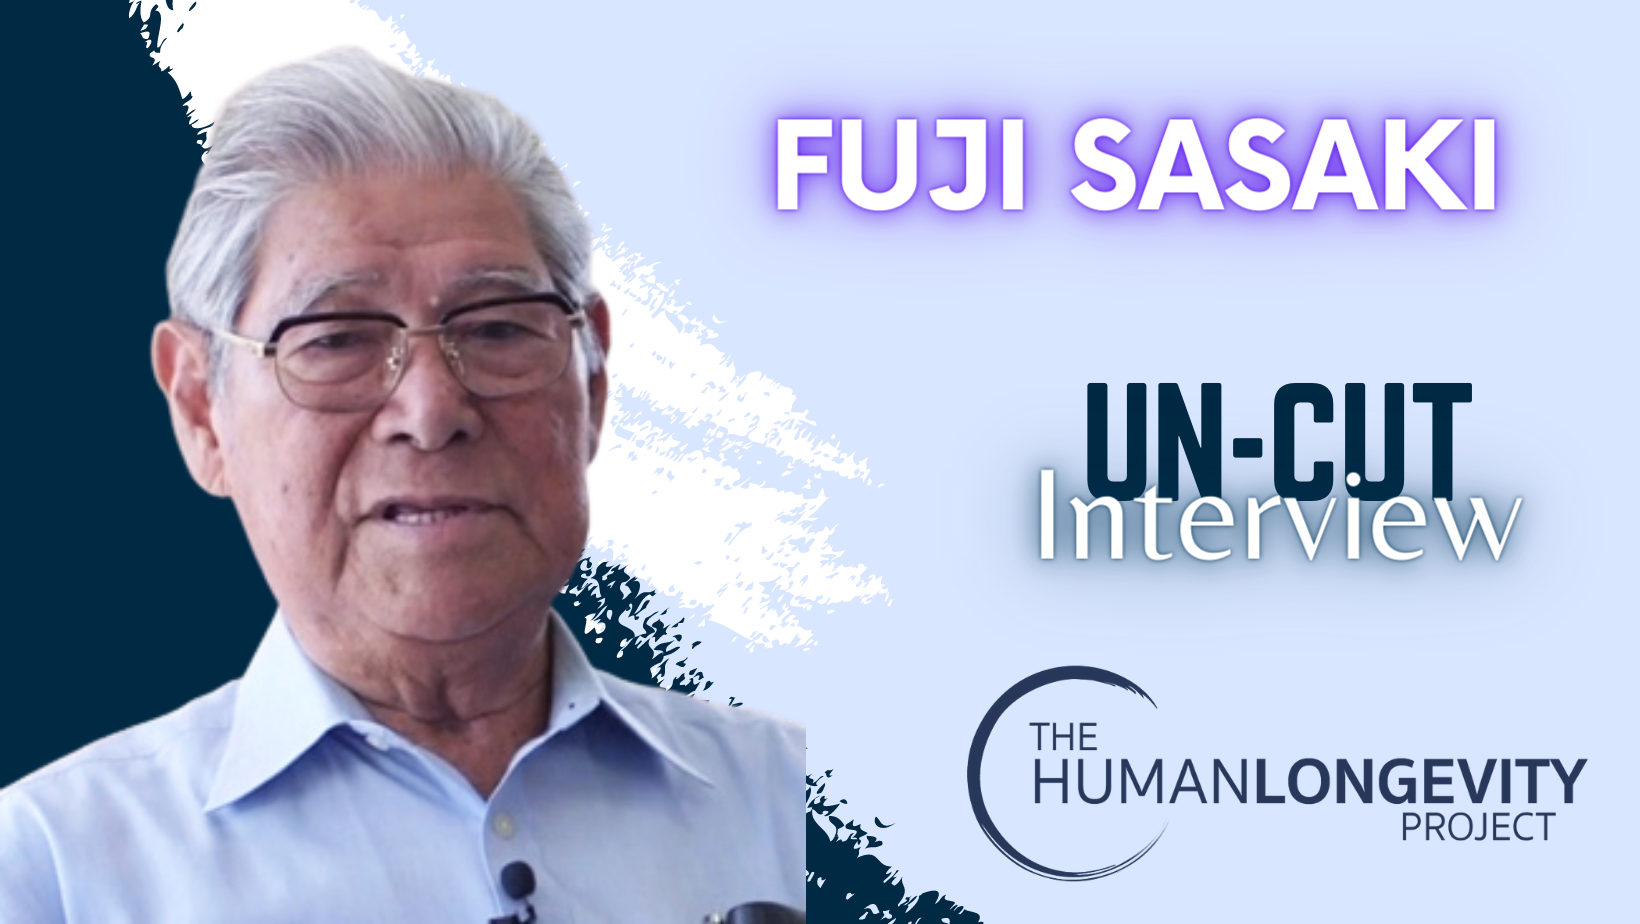 Human Longevity Project Uncut Interview With Fuji Sasaki